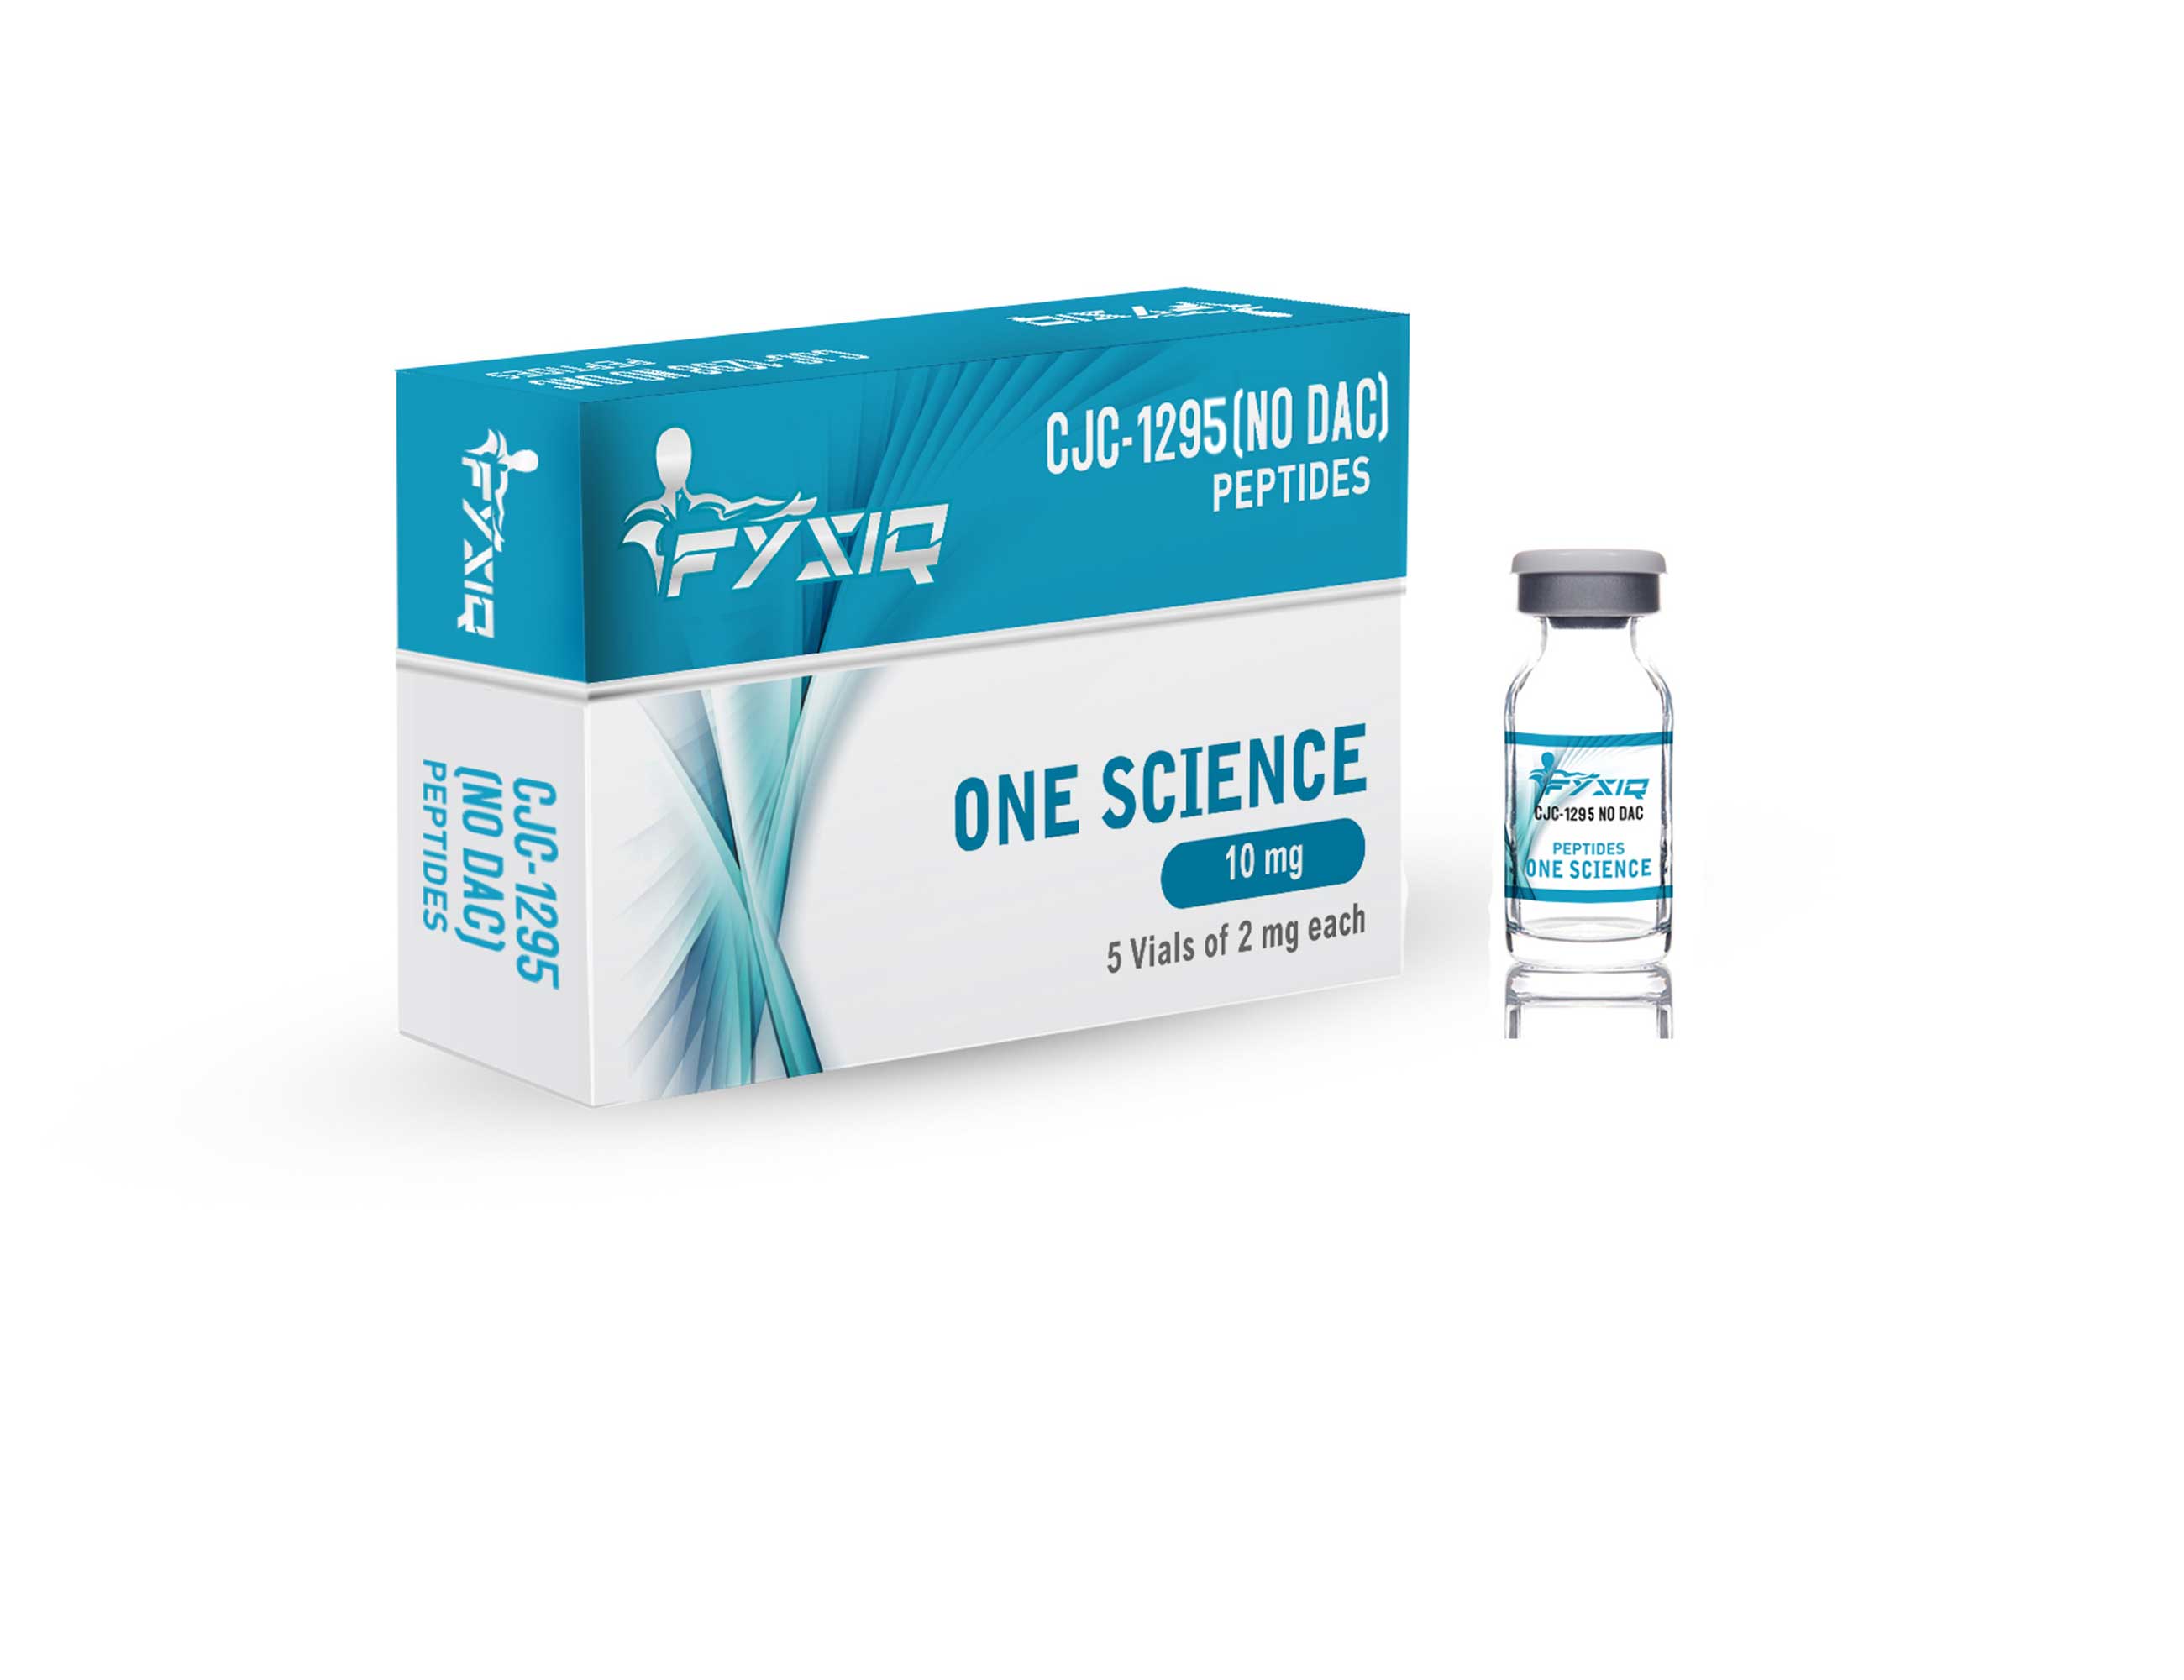 cjc 1295 no dac 10 mg 5 vials of 2 mg,one science,buy fysiqlab inc cjc 1295 no dac 10 mg 5 vials of 2 mg online,buy fysiqlab inc cjc 1295 no dac 10 mg 5 vials of 2 mg,buy fysiqlab cjc 1295 no dac 10 mg 5 vials of 2 mg online,buy cjc 1295 no dac 10 mg 5 vials of 2 mg online,buy cjc 1295 no dac online,buy cjc 1295 no dac,buy fysiqlab inc one science online,buy fysiqlab inc one science,buy fysiqlab one science online,buy one science online,